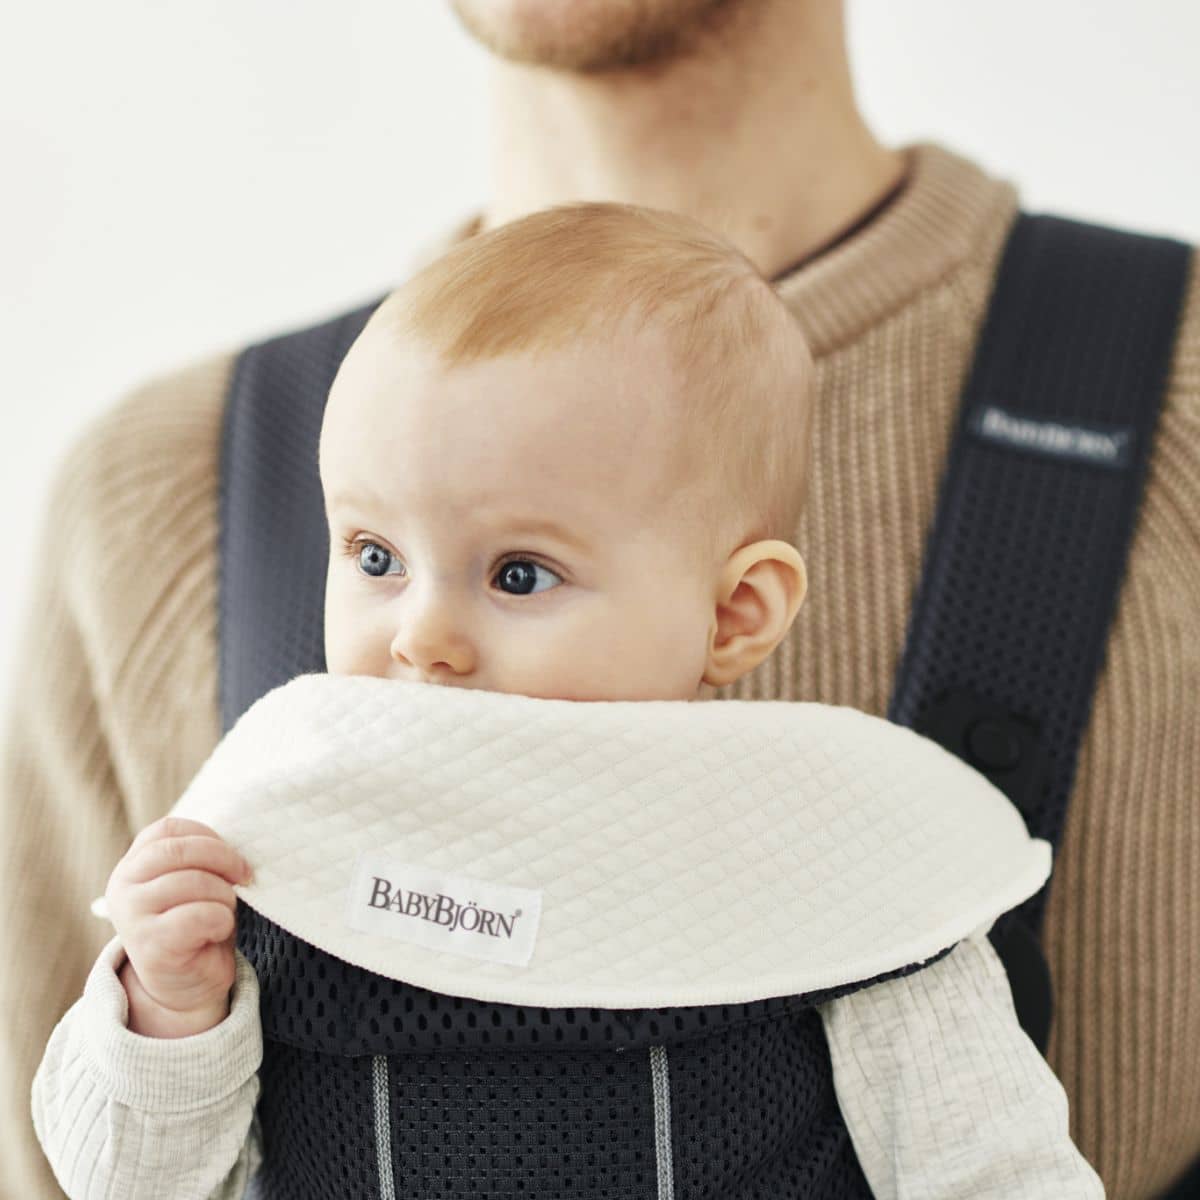 BabyBjorn Bibs for Baby Carrier